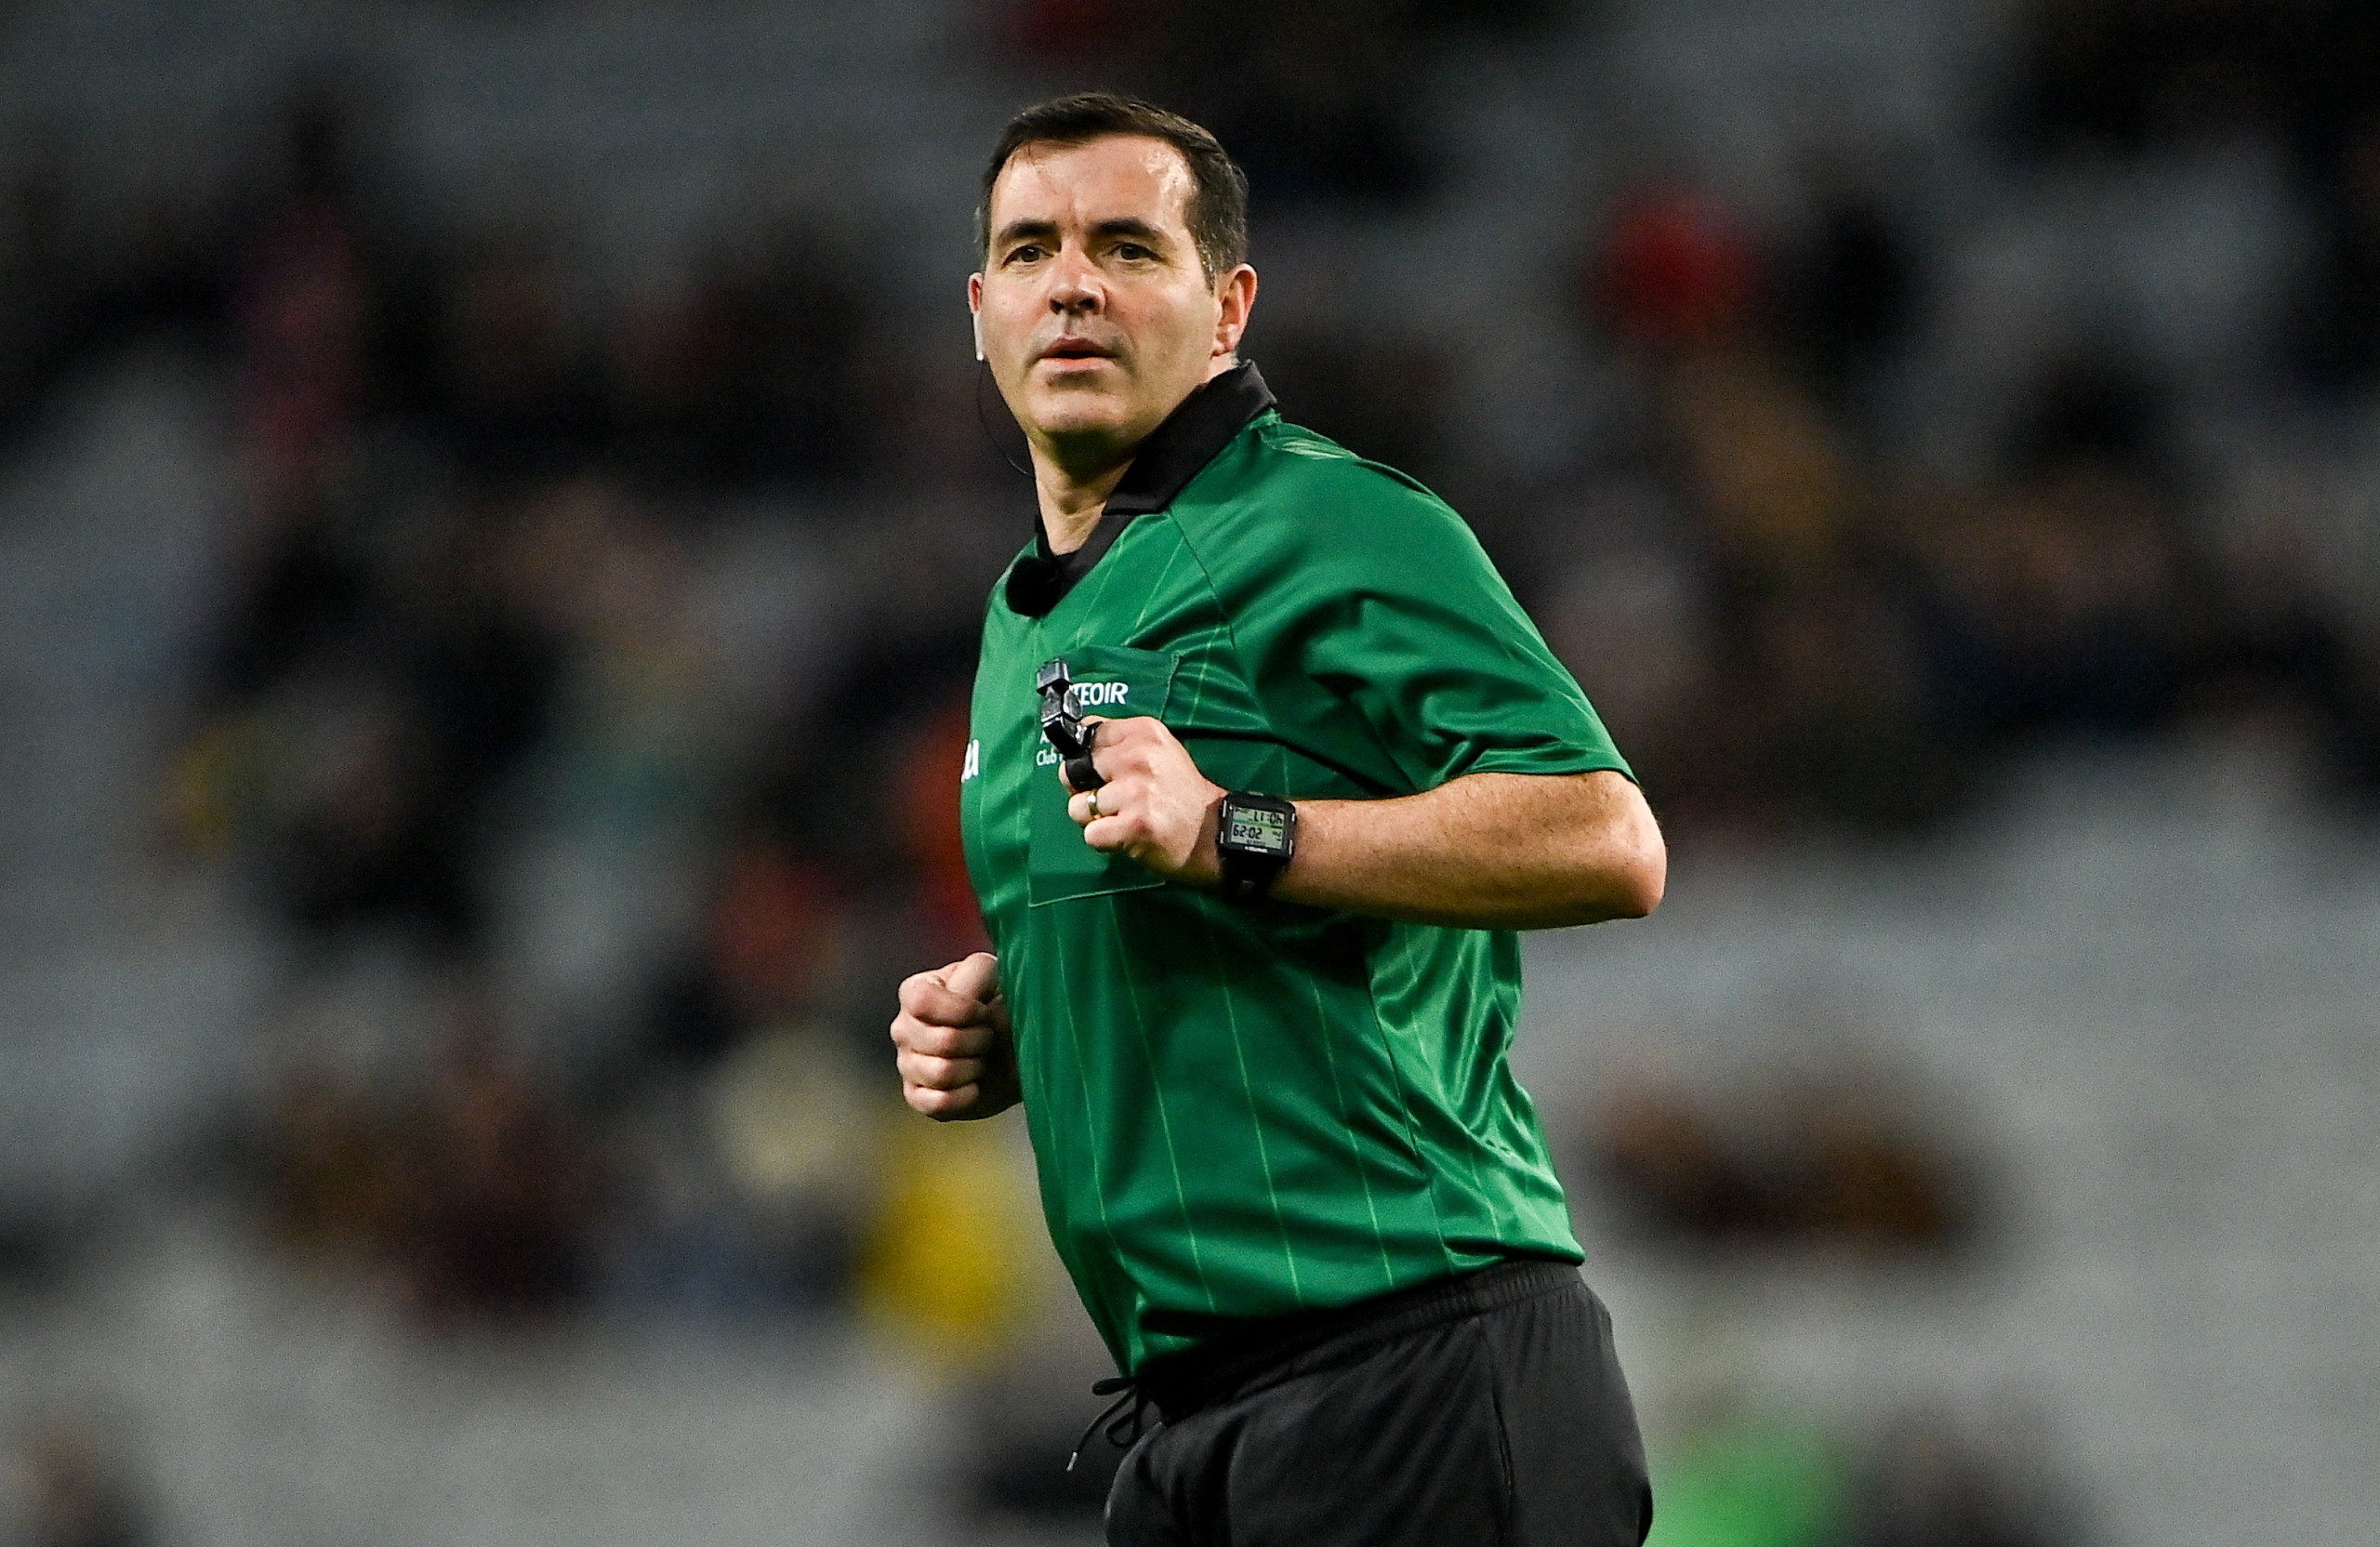 Sean Hurson to referee 2022 Ulster Senior Football Final